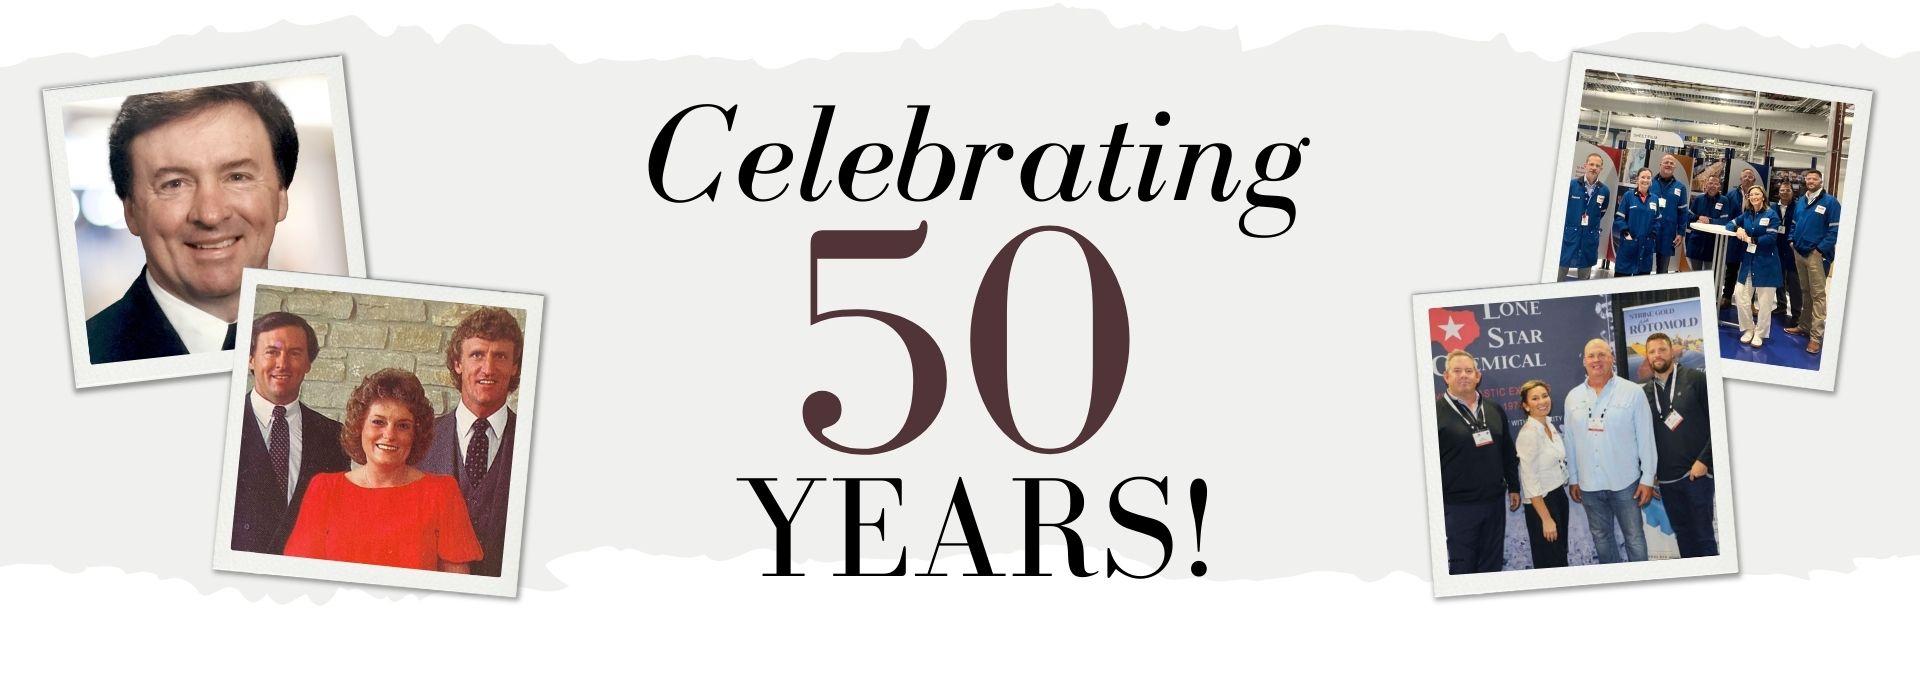 Celebrating 50 Years - Lone Star Chemical